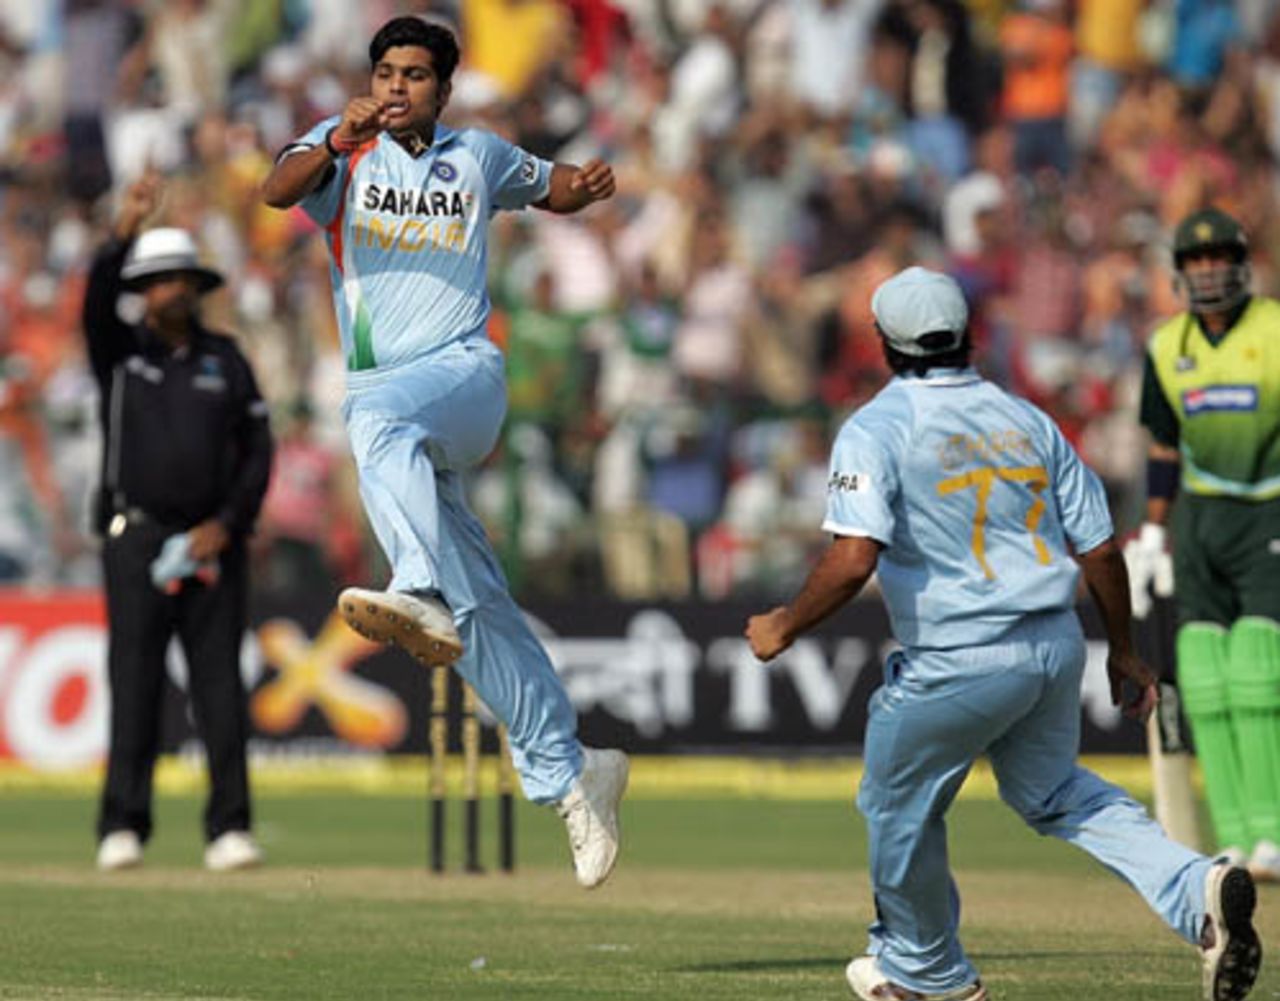 RP Singh celebrates after trapping Salman Butt, India v Pakistan, 4th ODI, Gwalior, November 15, 2007 